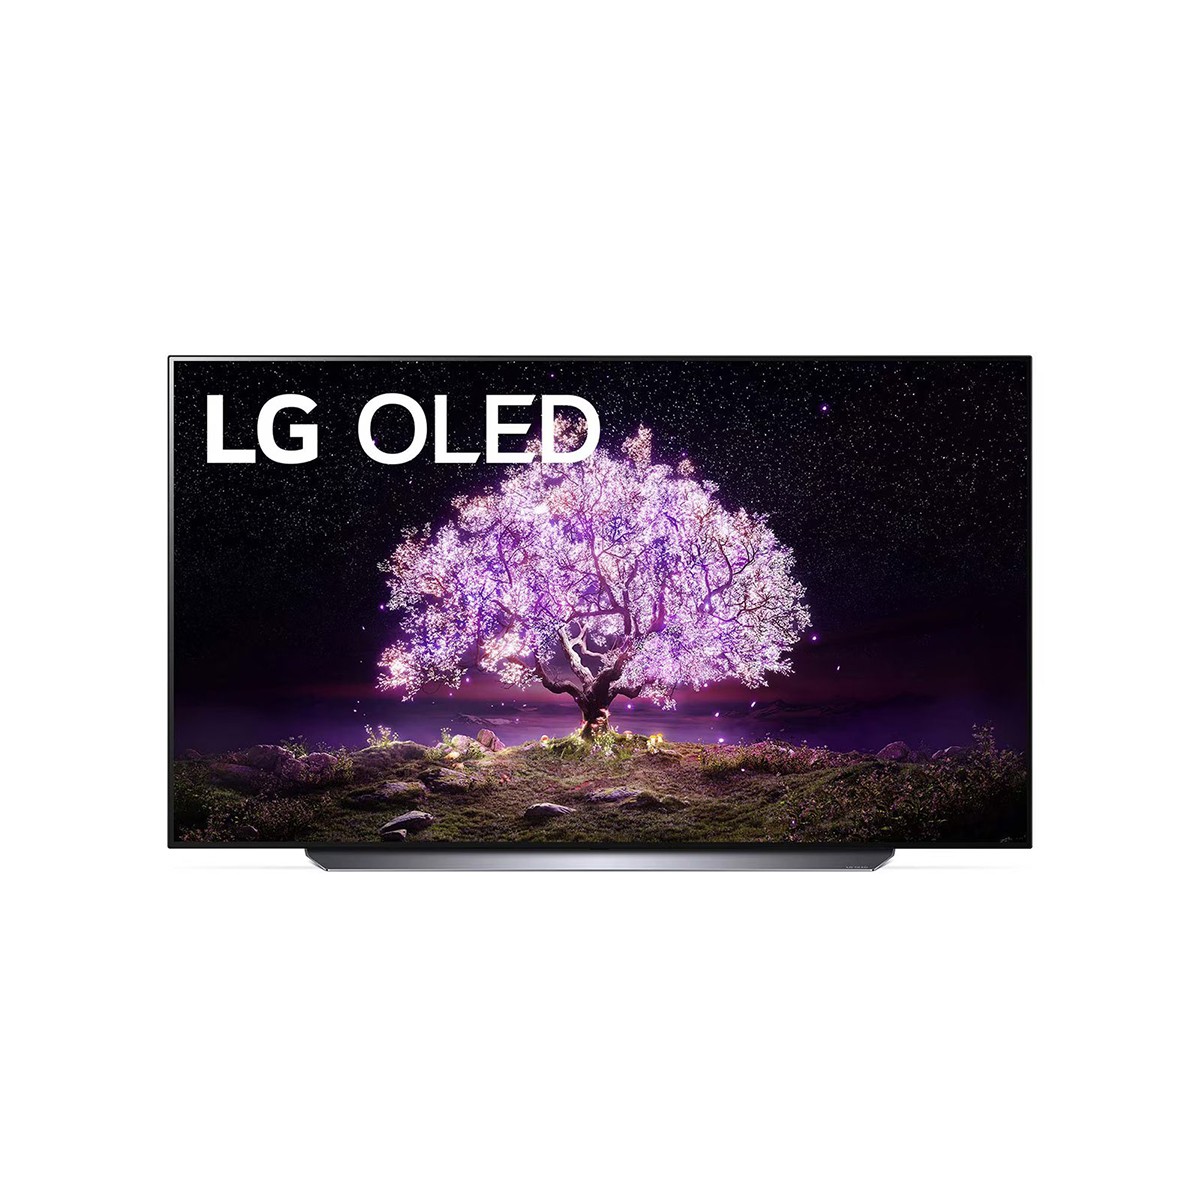 LG OLED TV 55 Inch C1 Series, Cinema Screen Design 4K Cinema HDR WebOS Smart AI ThinQ Pixel Dimming